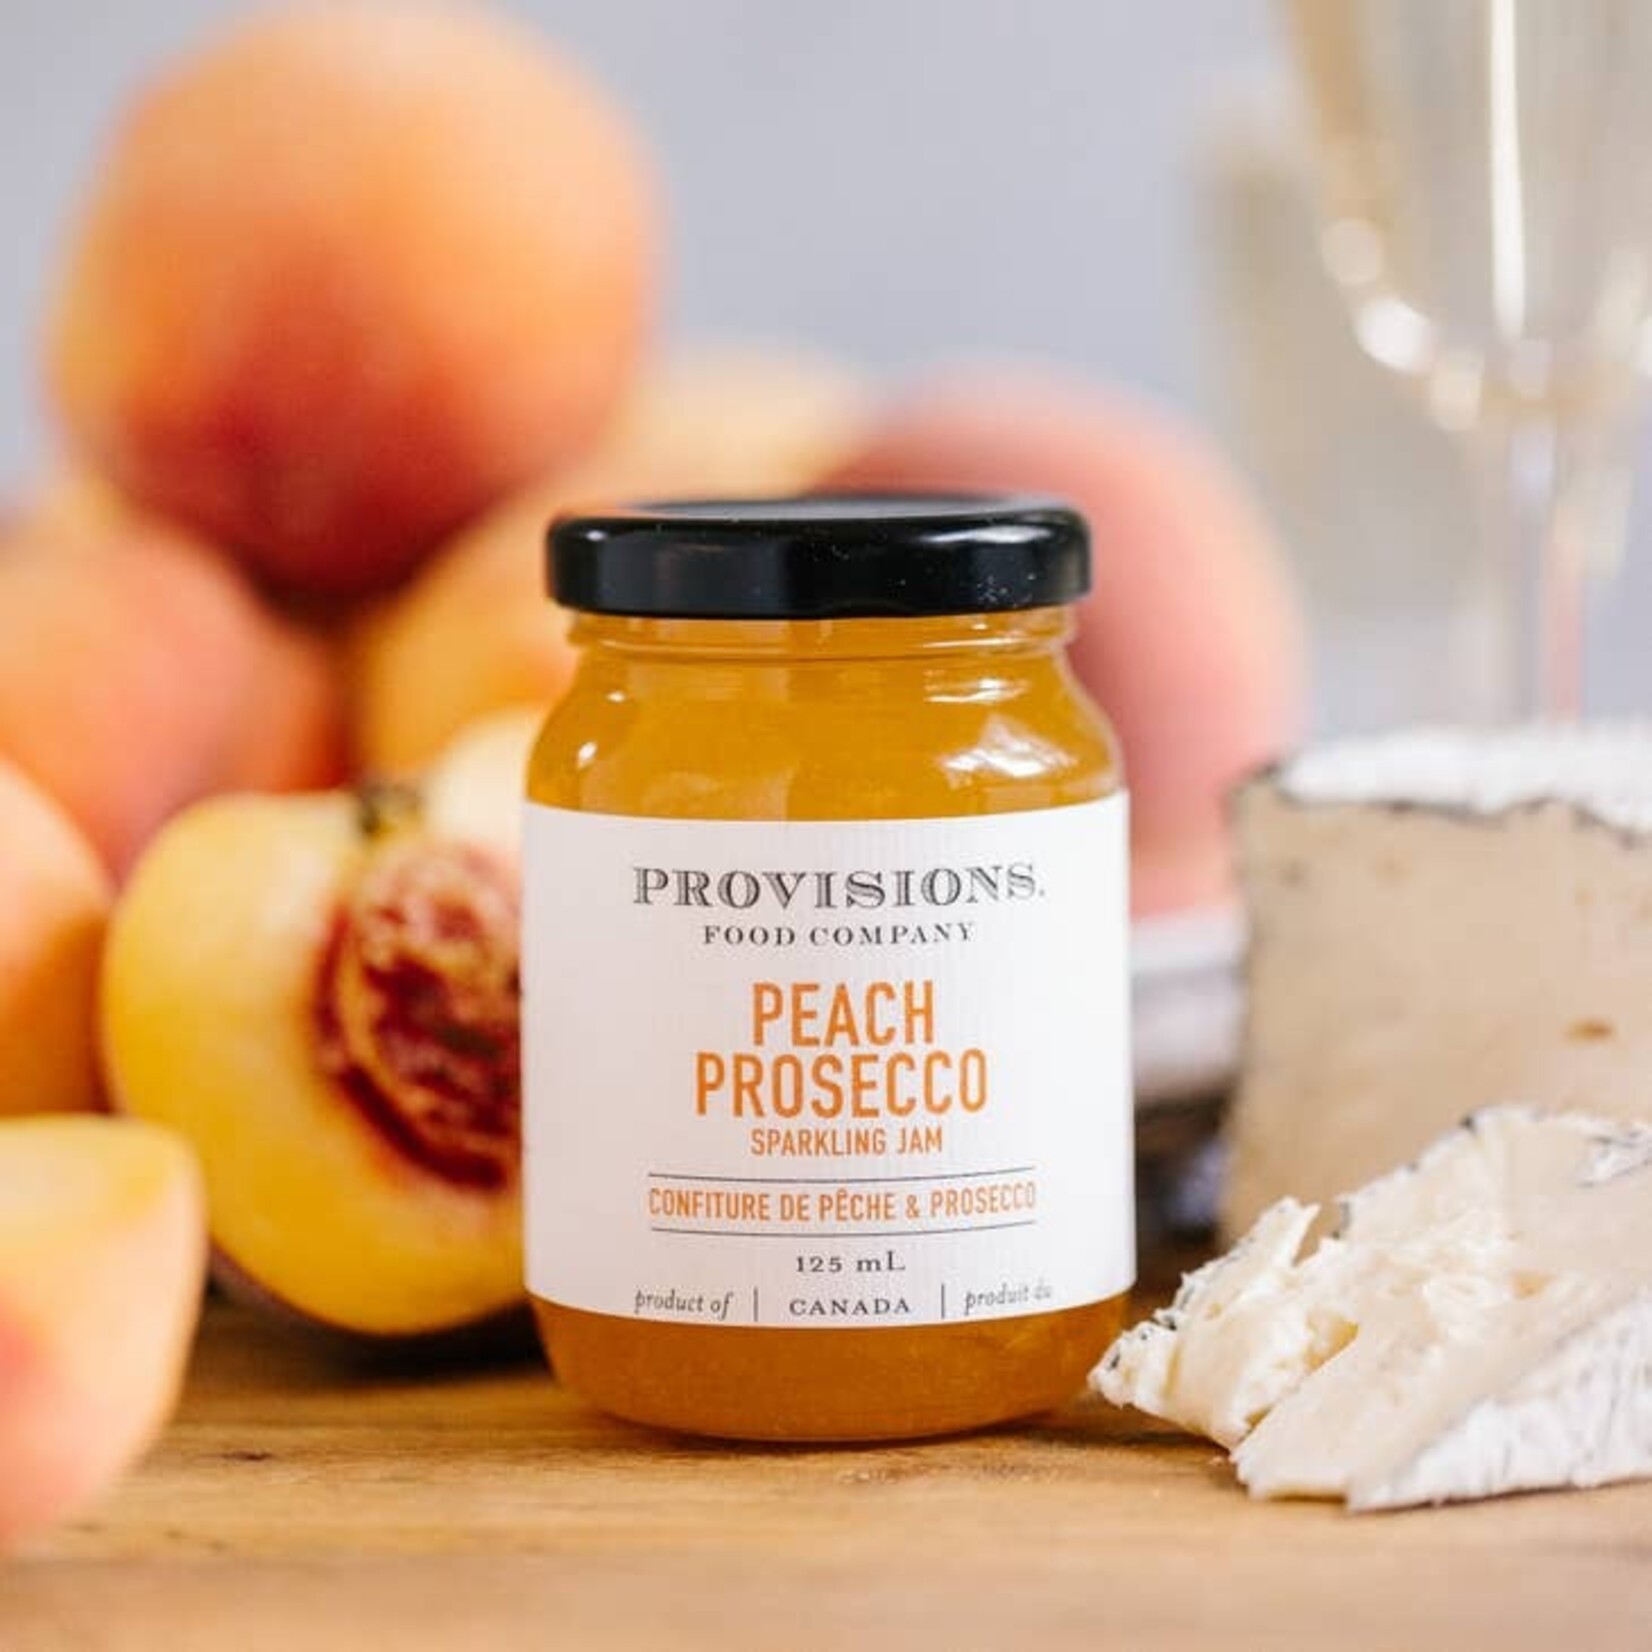 Provisions Food Company Peach Prosecco Sparkling Jam - 125ml